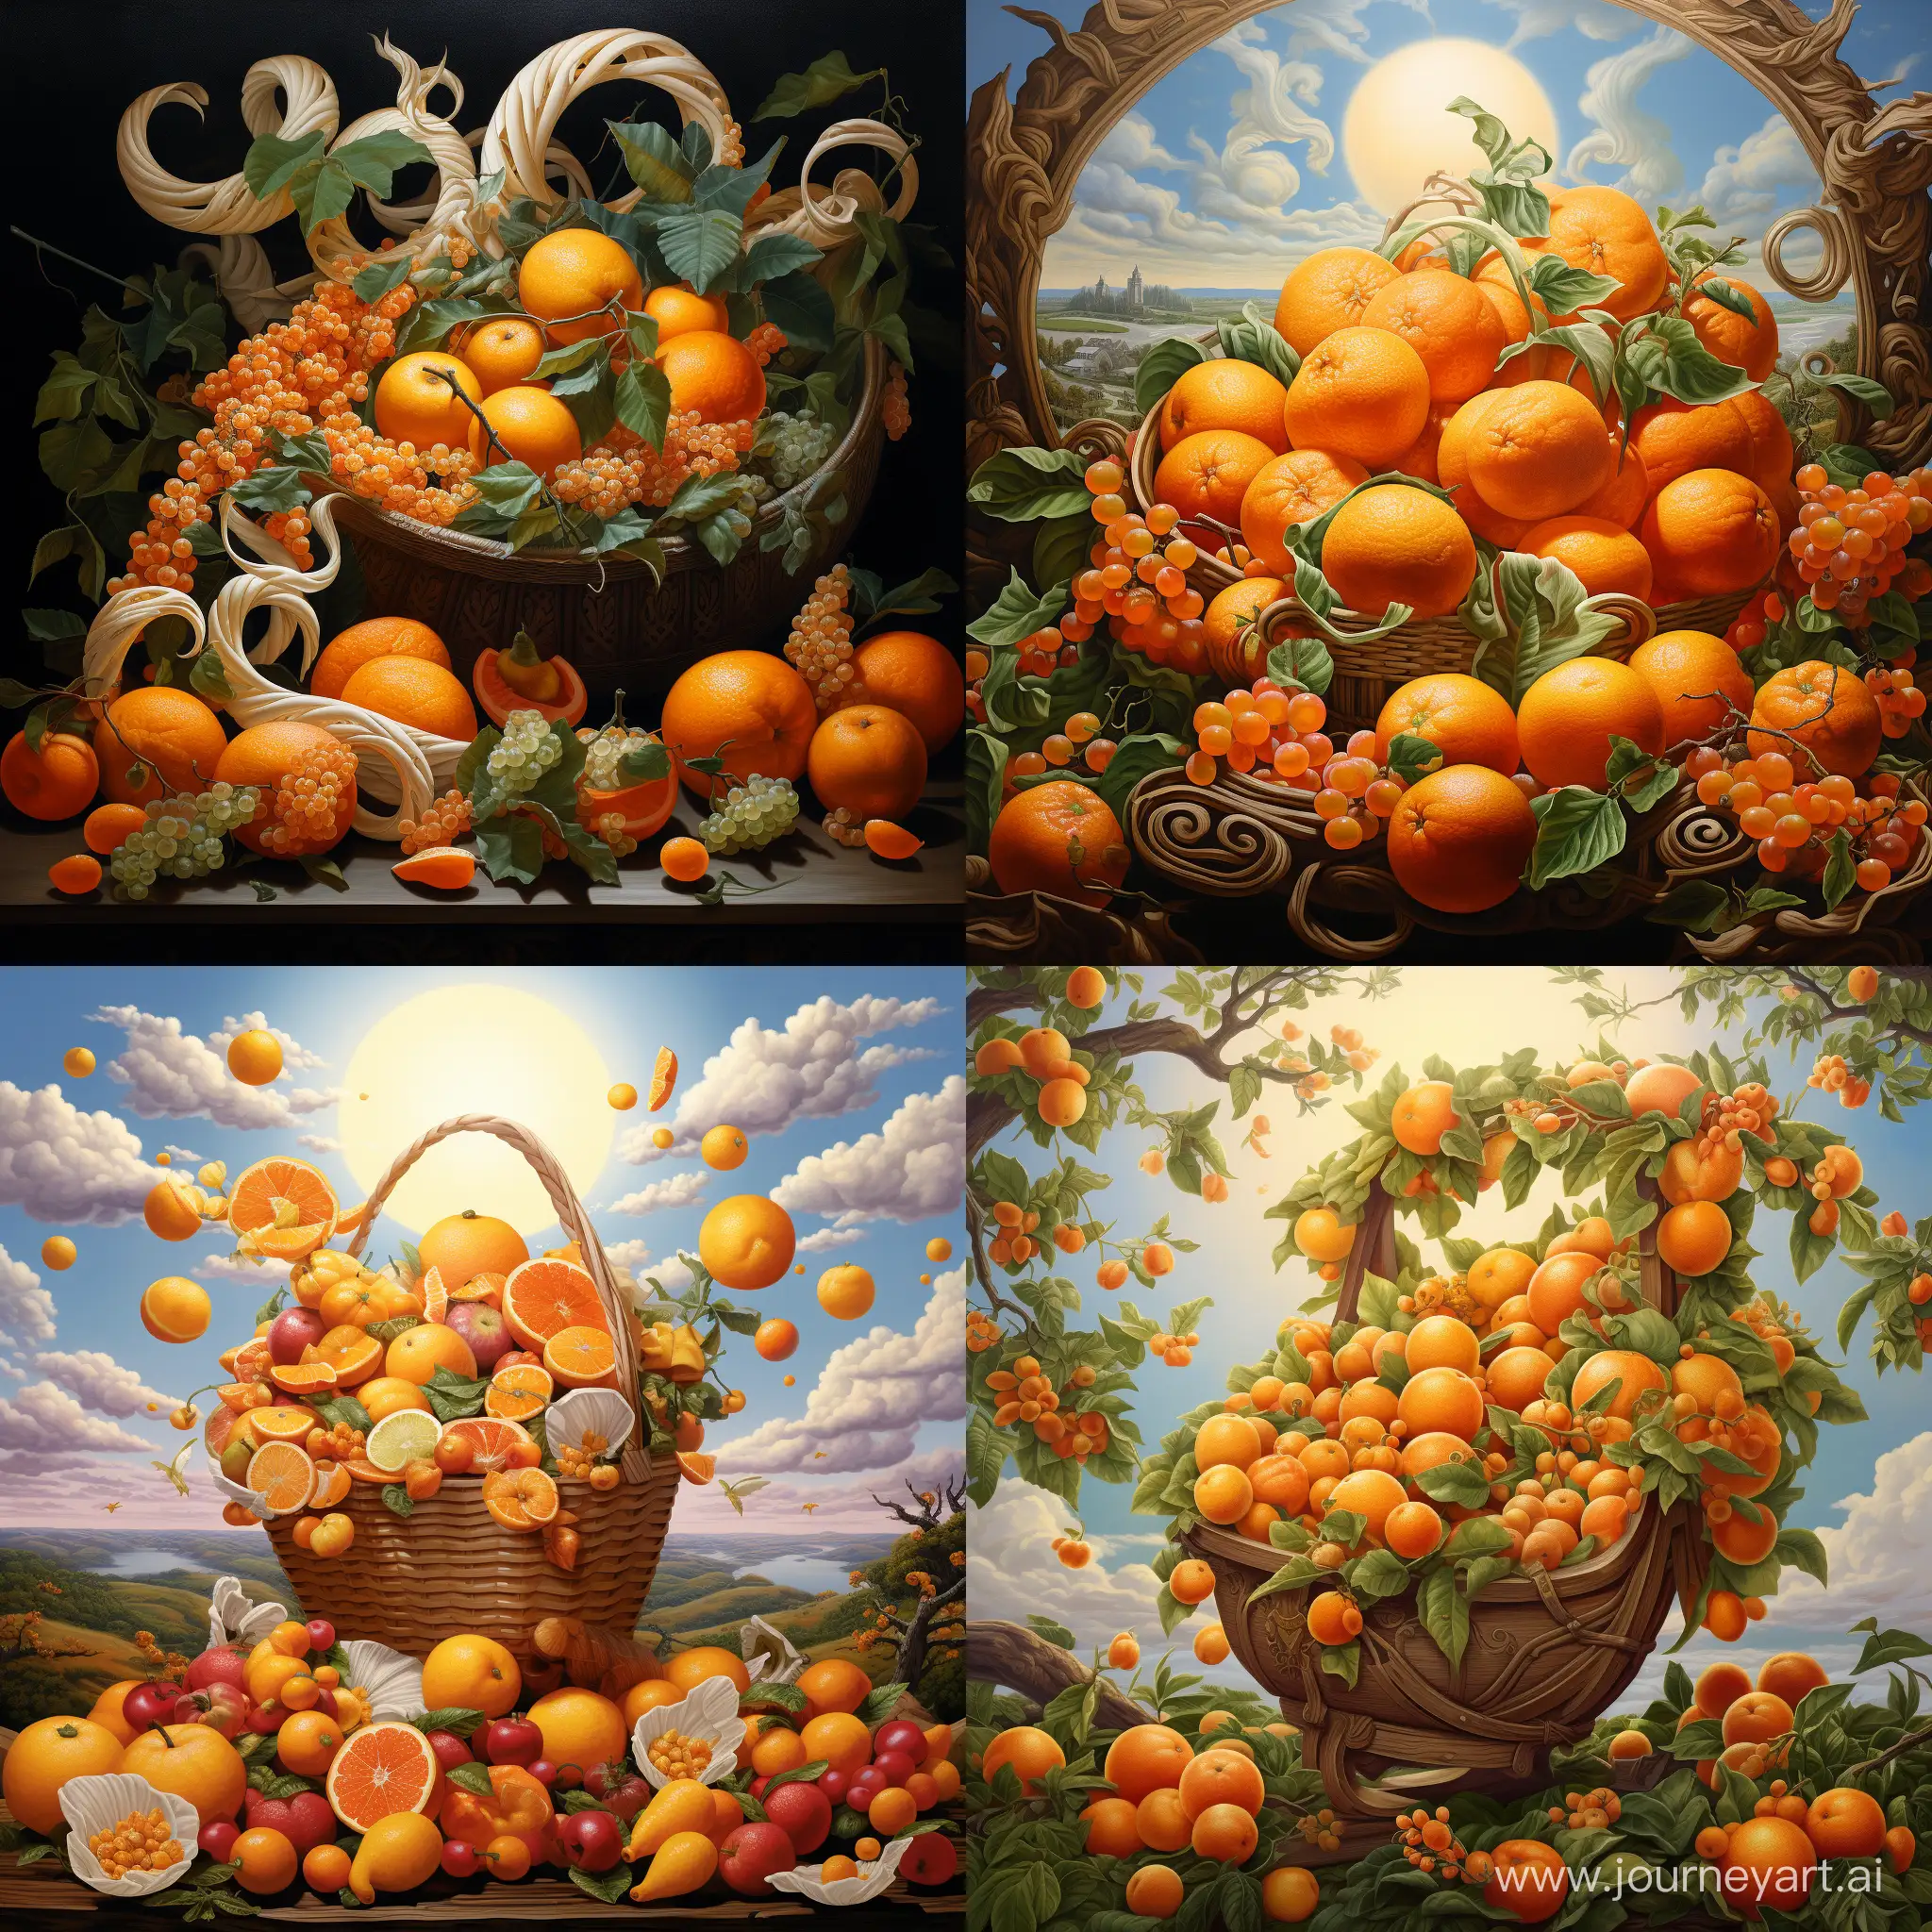 Abundant-Cornucopia-Overflowing-with-Fresh-Oranges